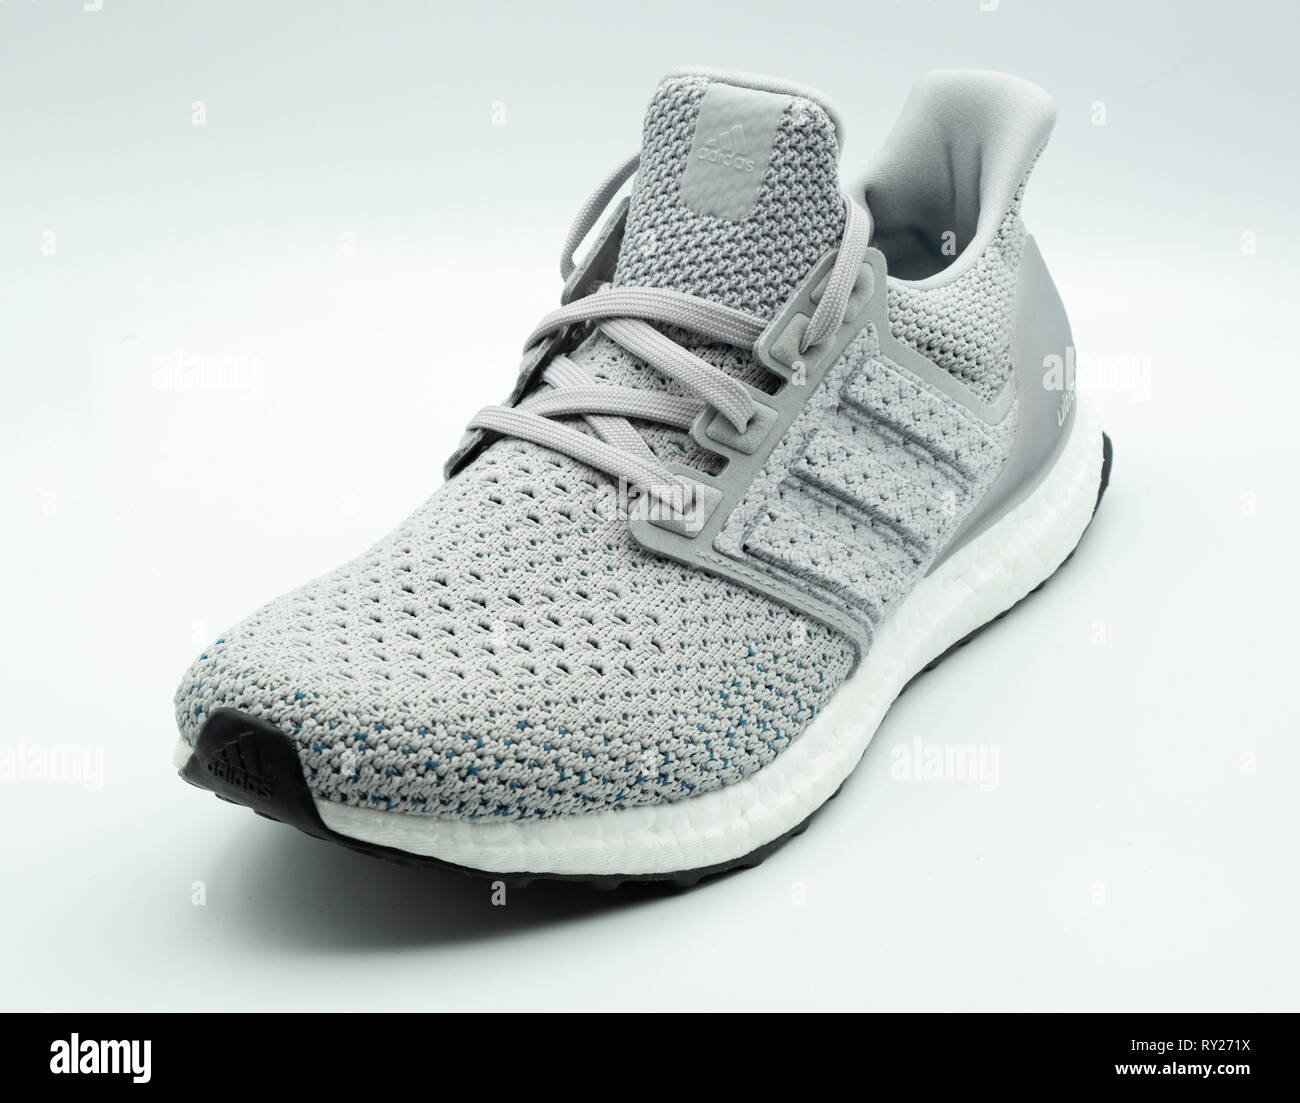 Adidas ultra boost -Fotos und -Bildmaterial in hoher Auflösung – Alamy